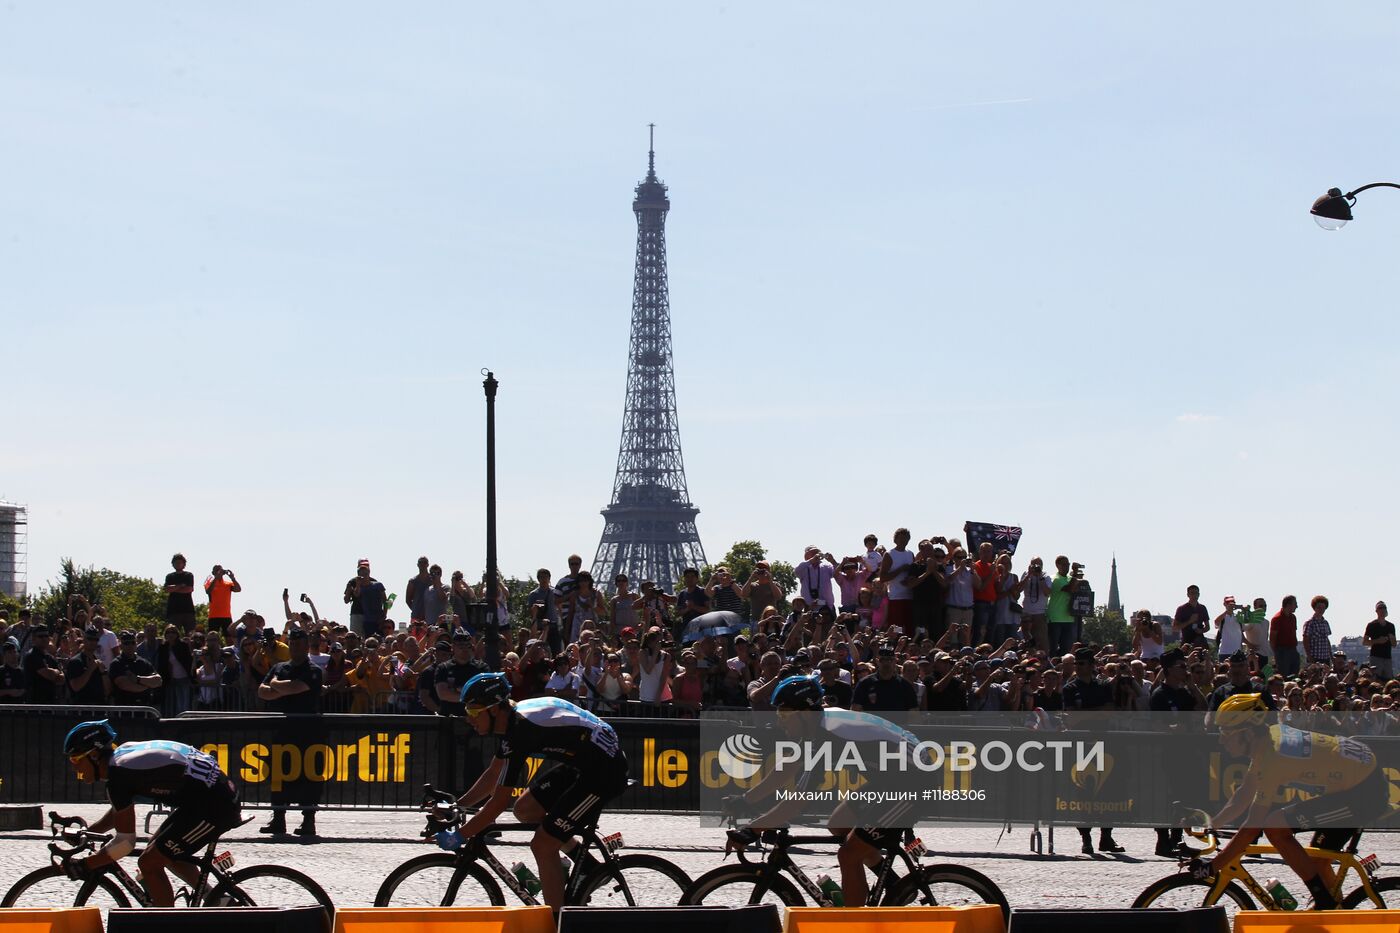 Велоспорт. "Тур де Франс - 2012". Финиш